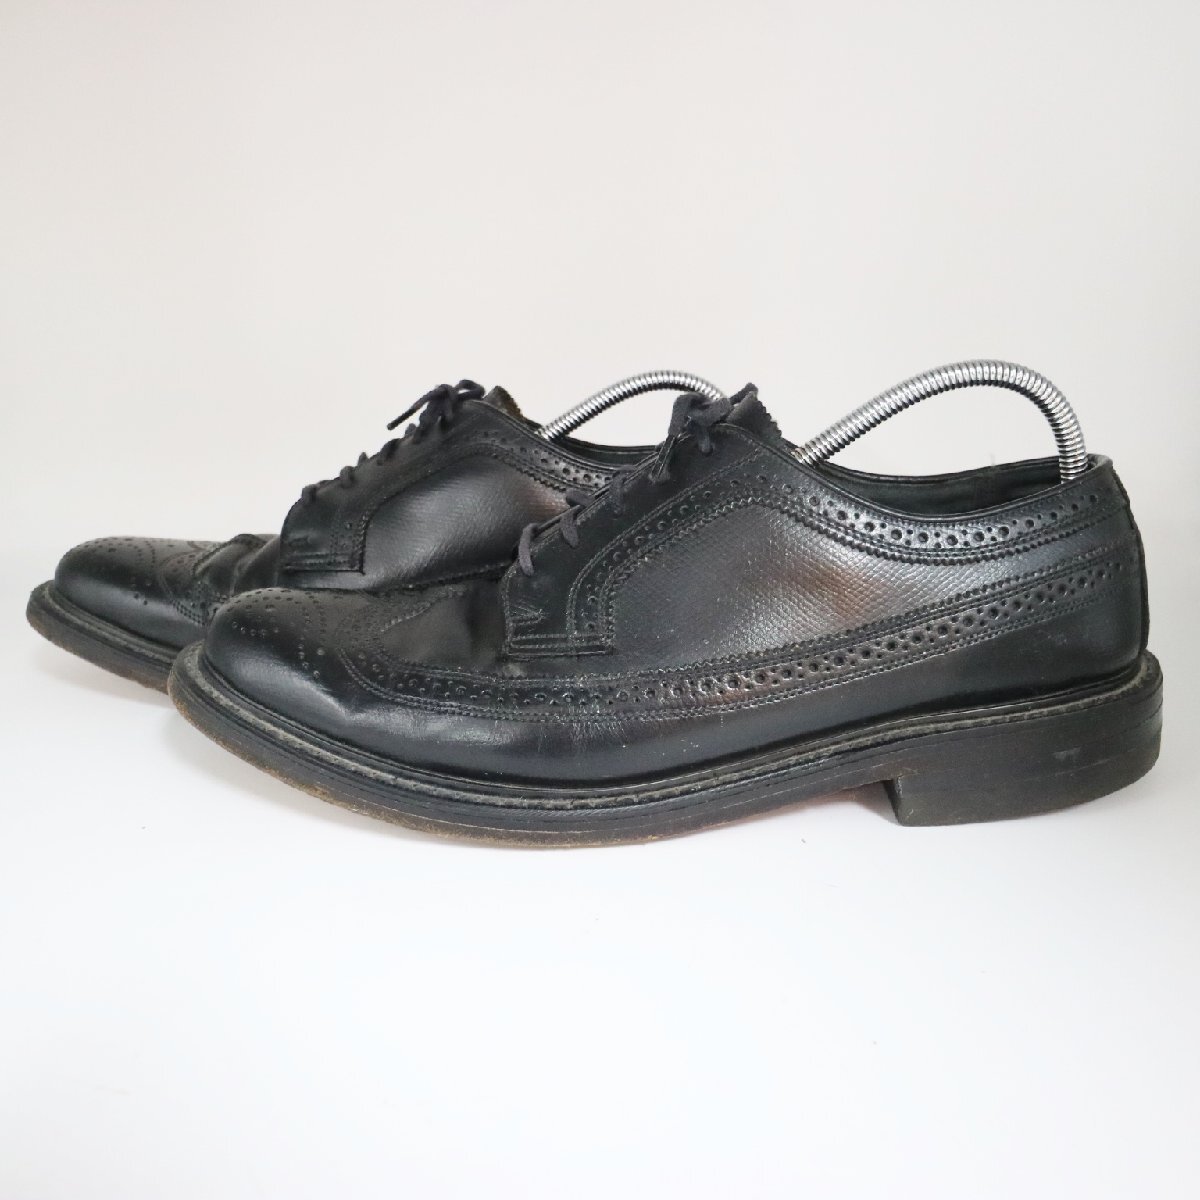 USA製 STAFFORD スタッフォード 外羽根式 ロングウイングチップ 本革 レザーシューズ 革靴 ( メンズ 10D ≒ 28.0cm ) KA0022 1円スタートの画像3